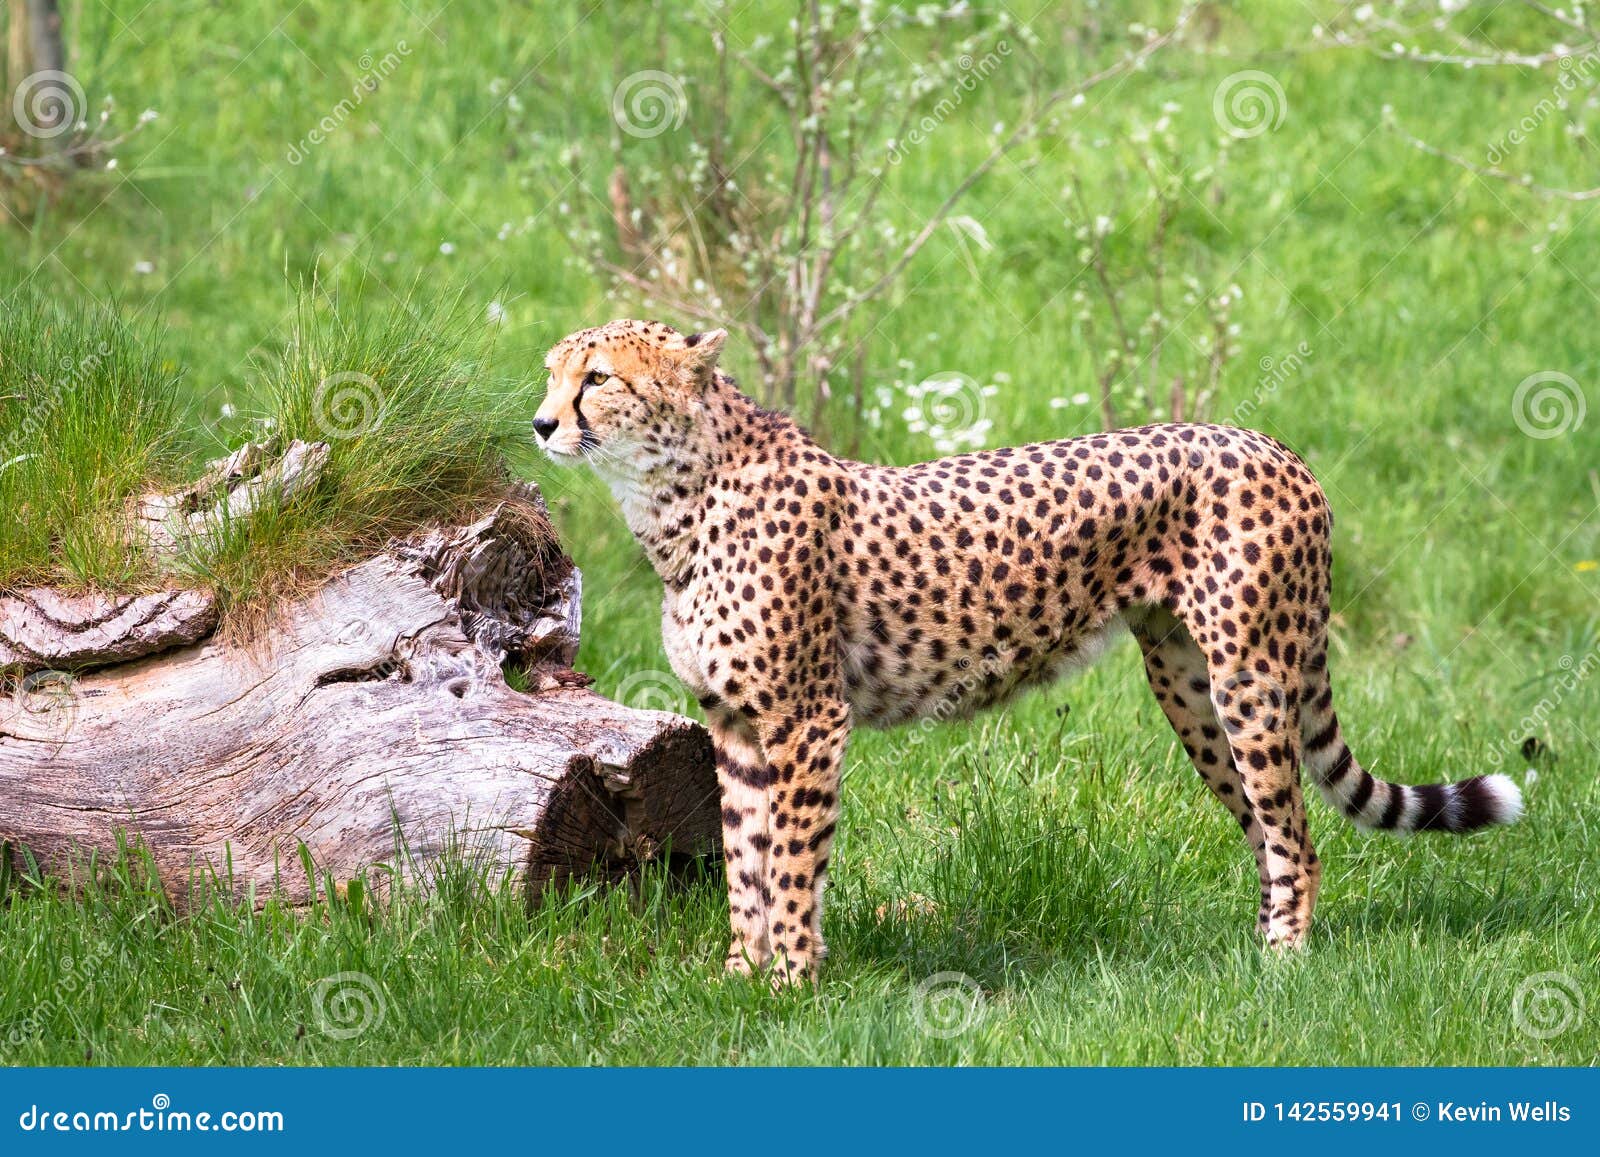 north african cheetah aka northeast african cheetah